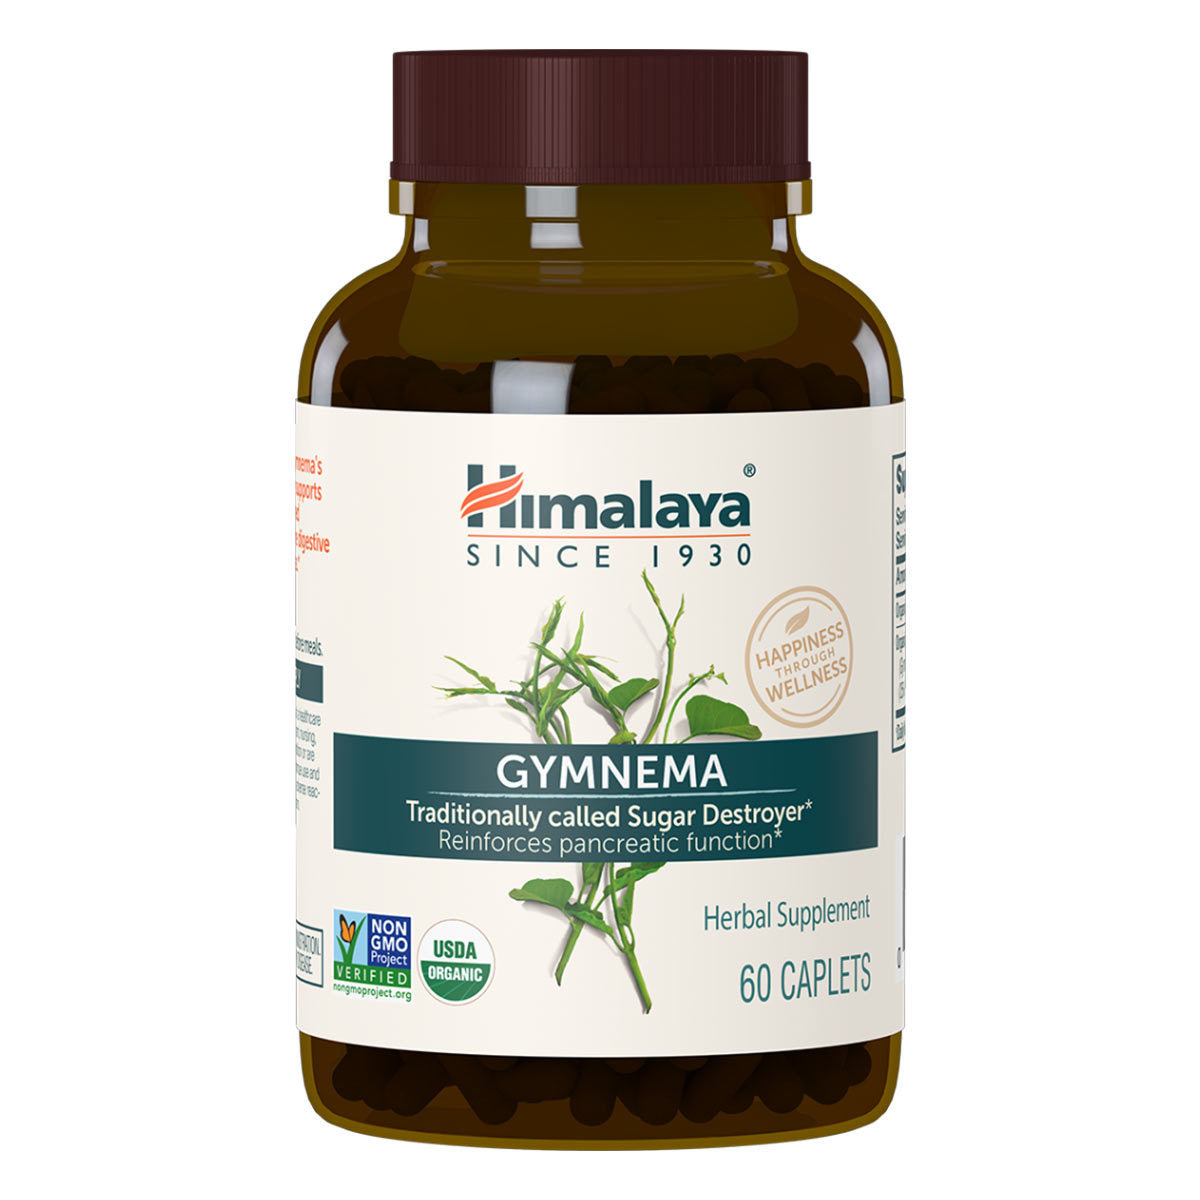 Primary image of Organic Gymnema